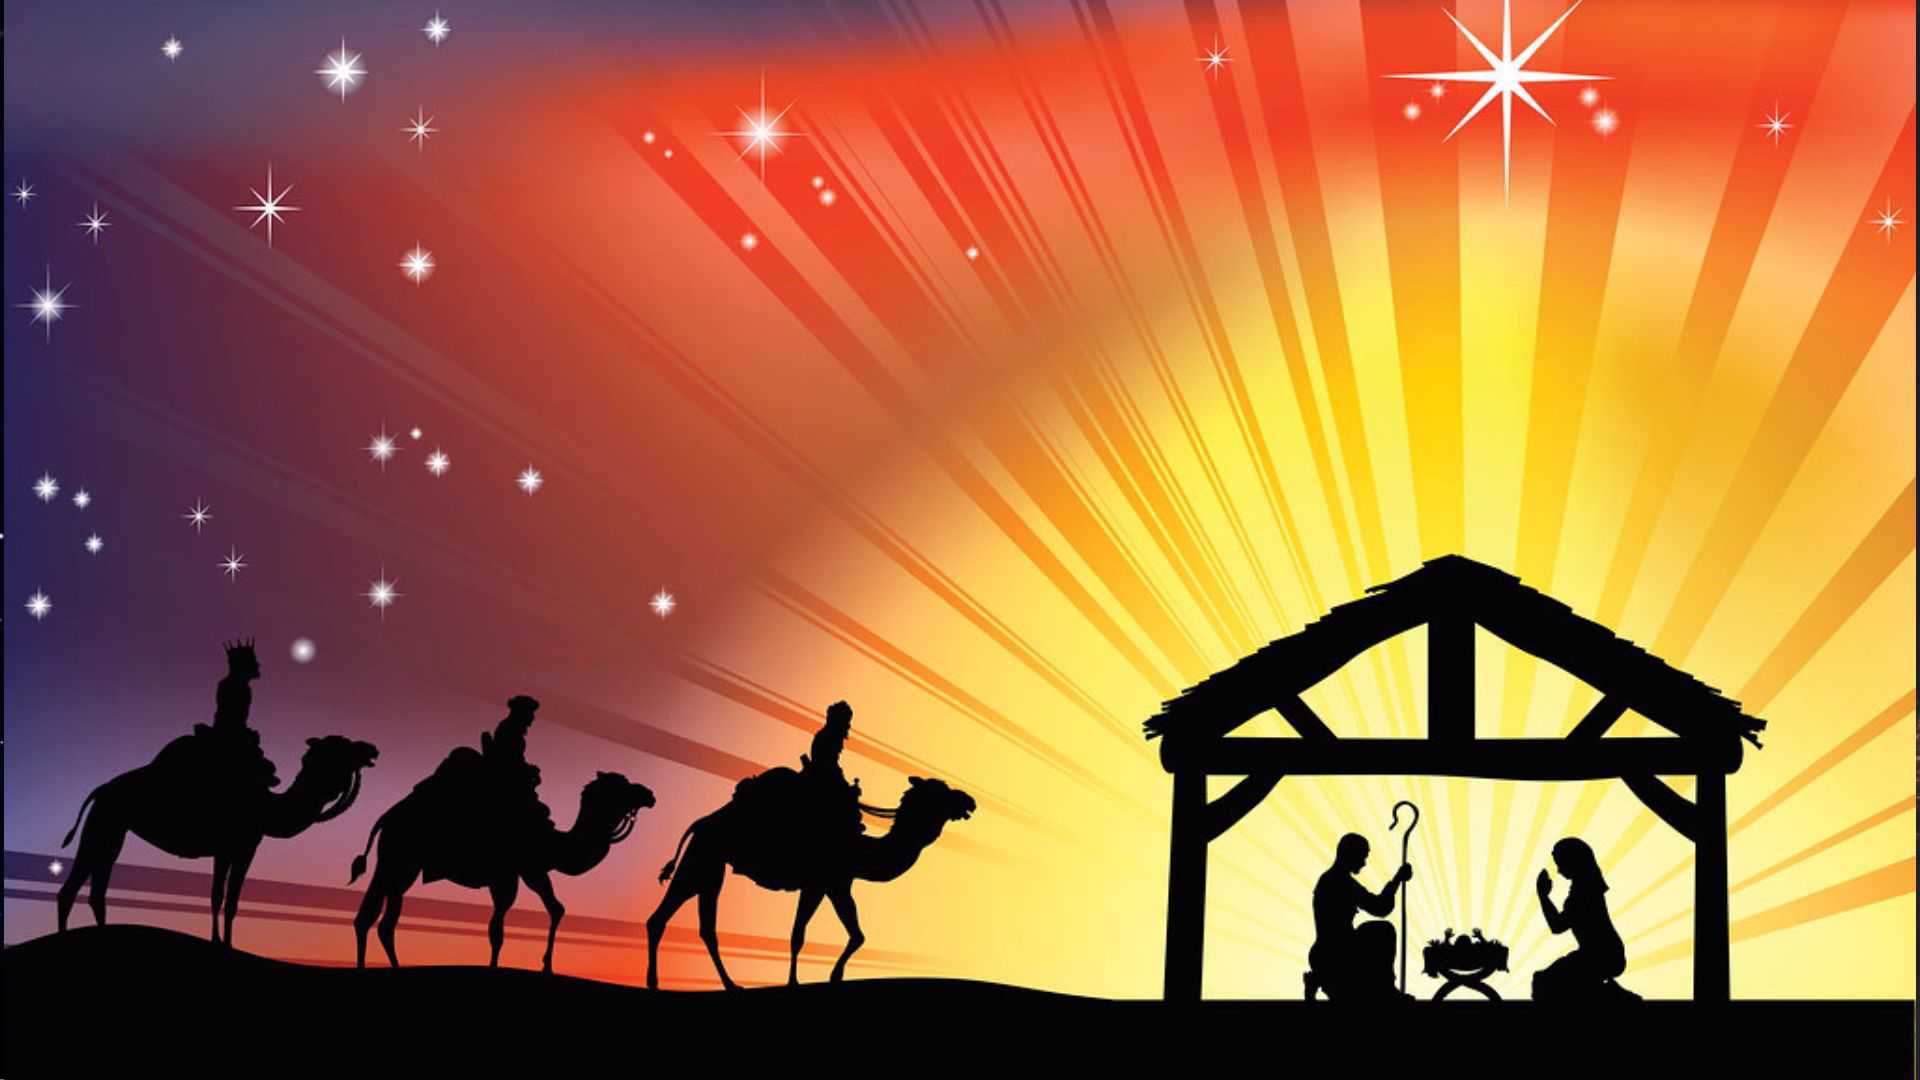 Was Jesus born on December 25? Biblical & Quranic View